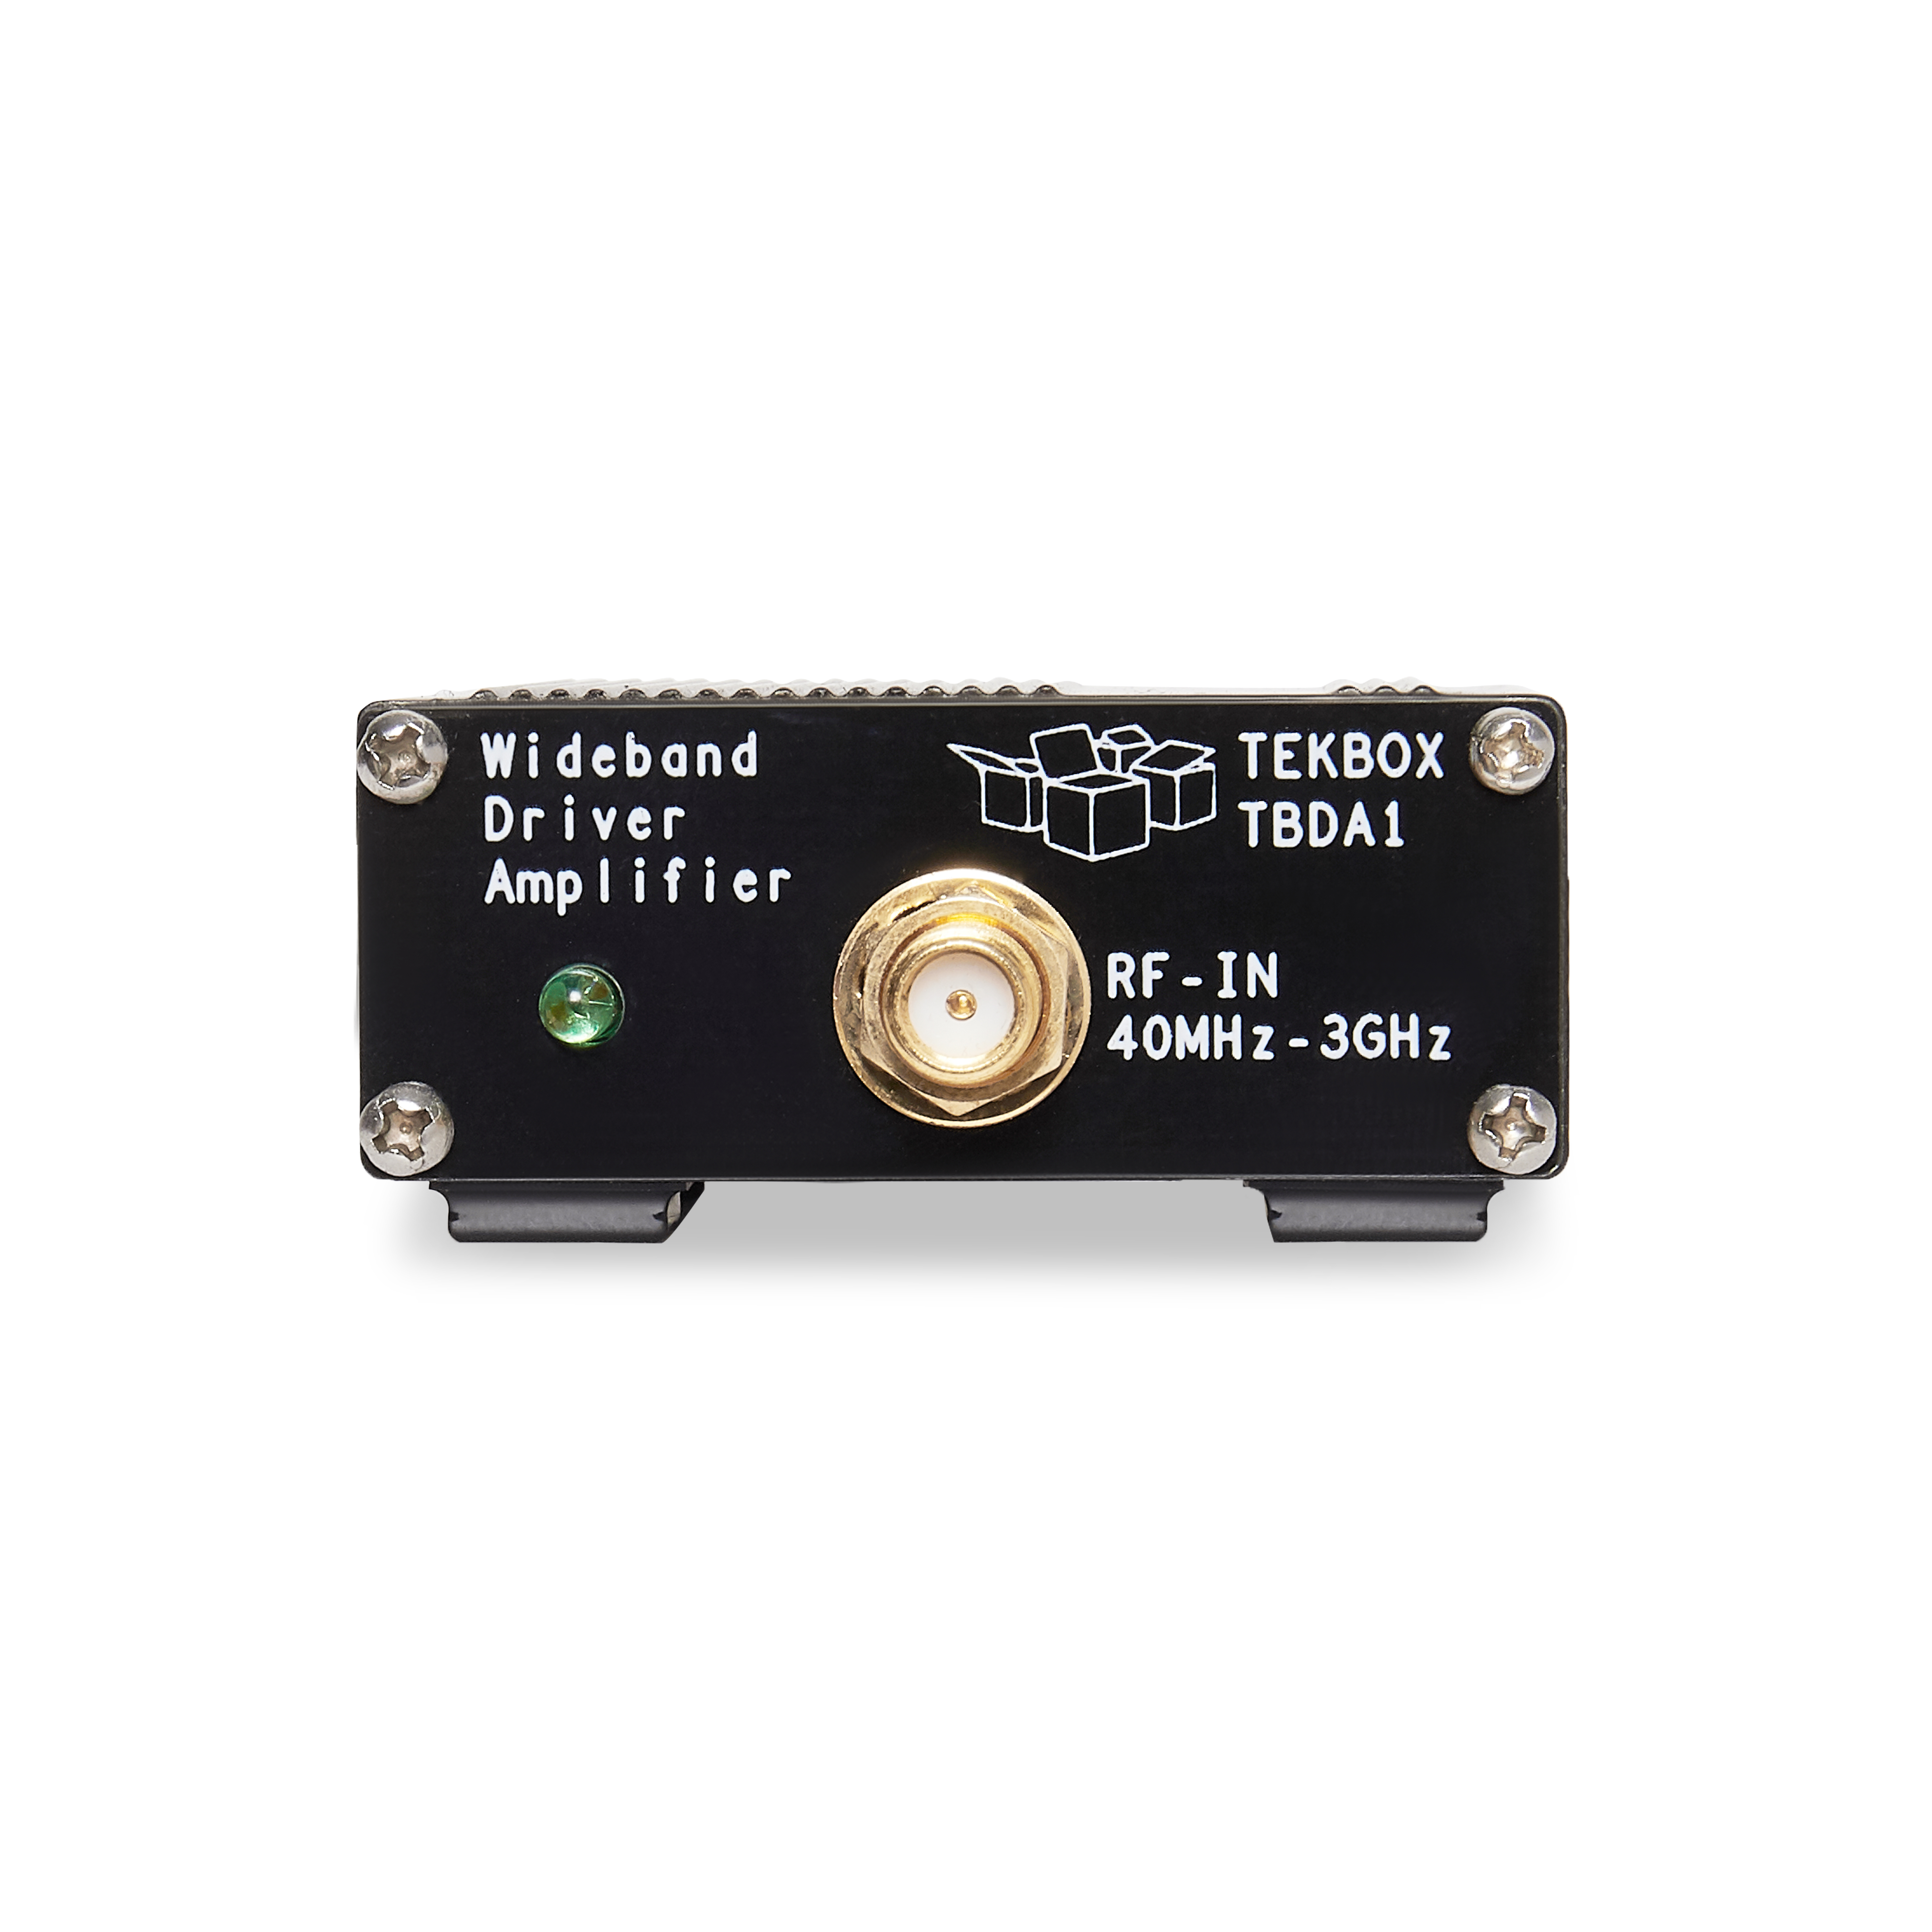 Gallery TBDA1 - 40 MHz - 3 GHz, +22dBm, Modulated Wideband Driver Amplifier